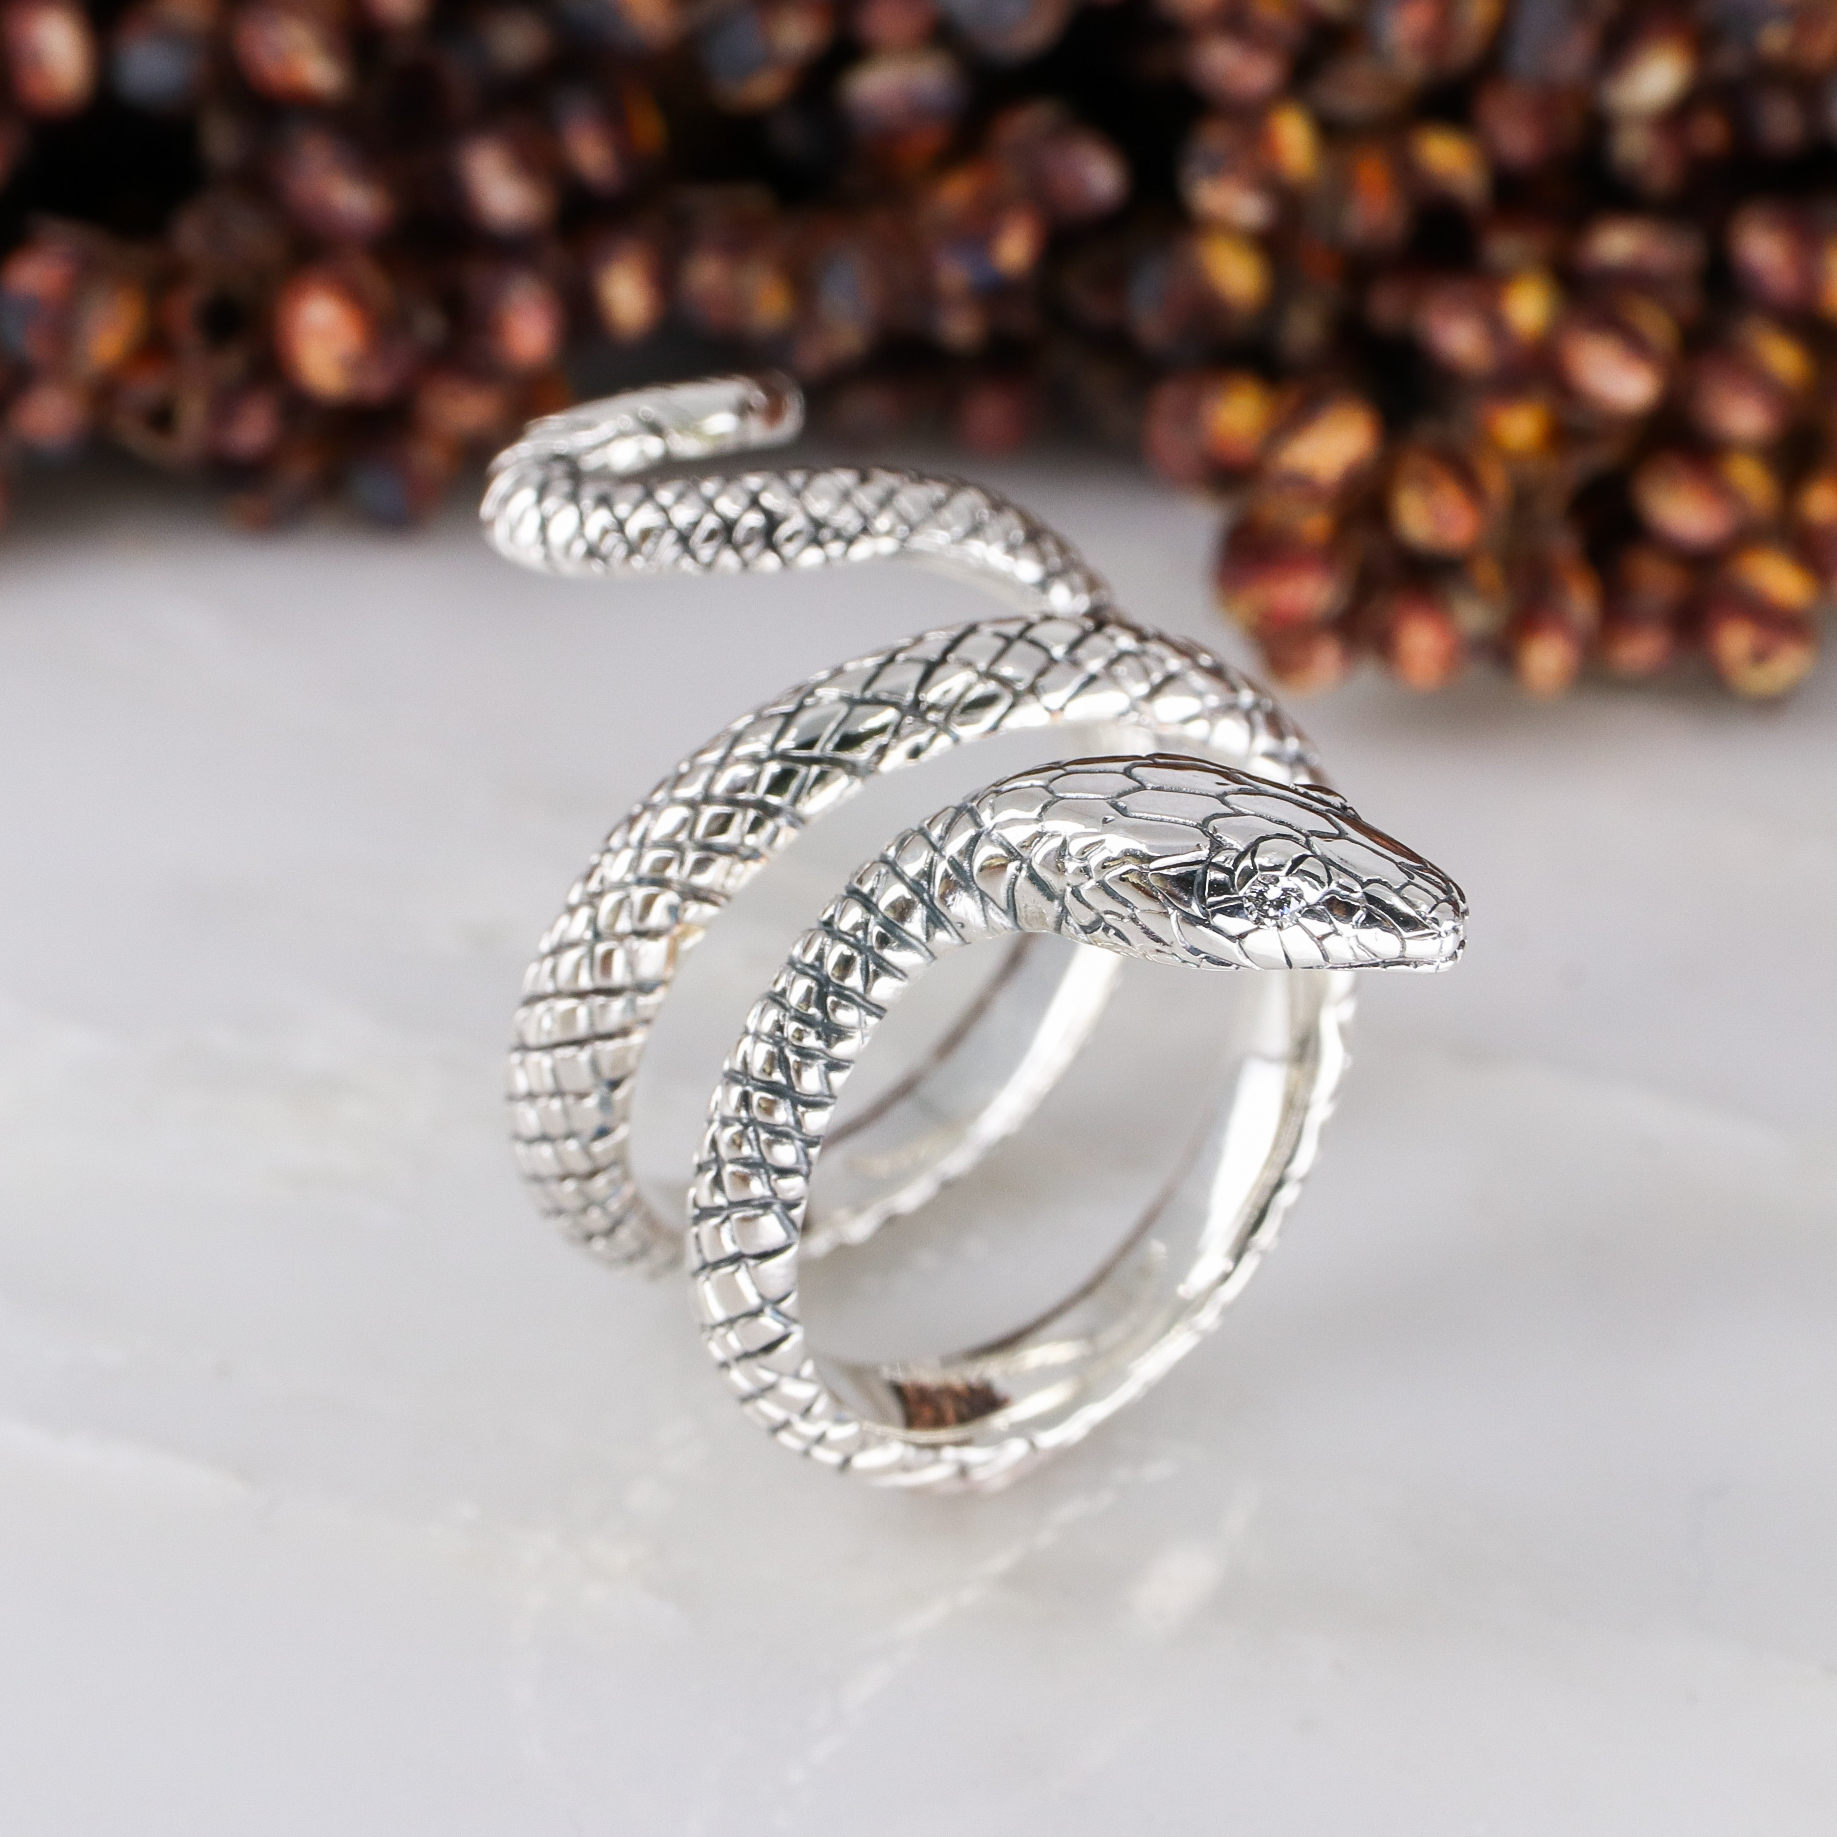 Sterling Silver Adjustable Ring - Snake Ring